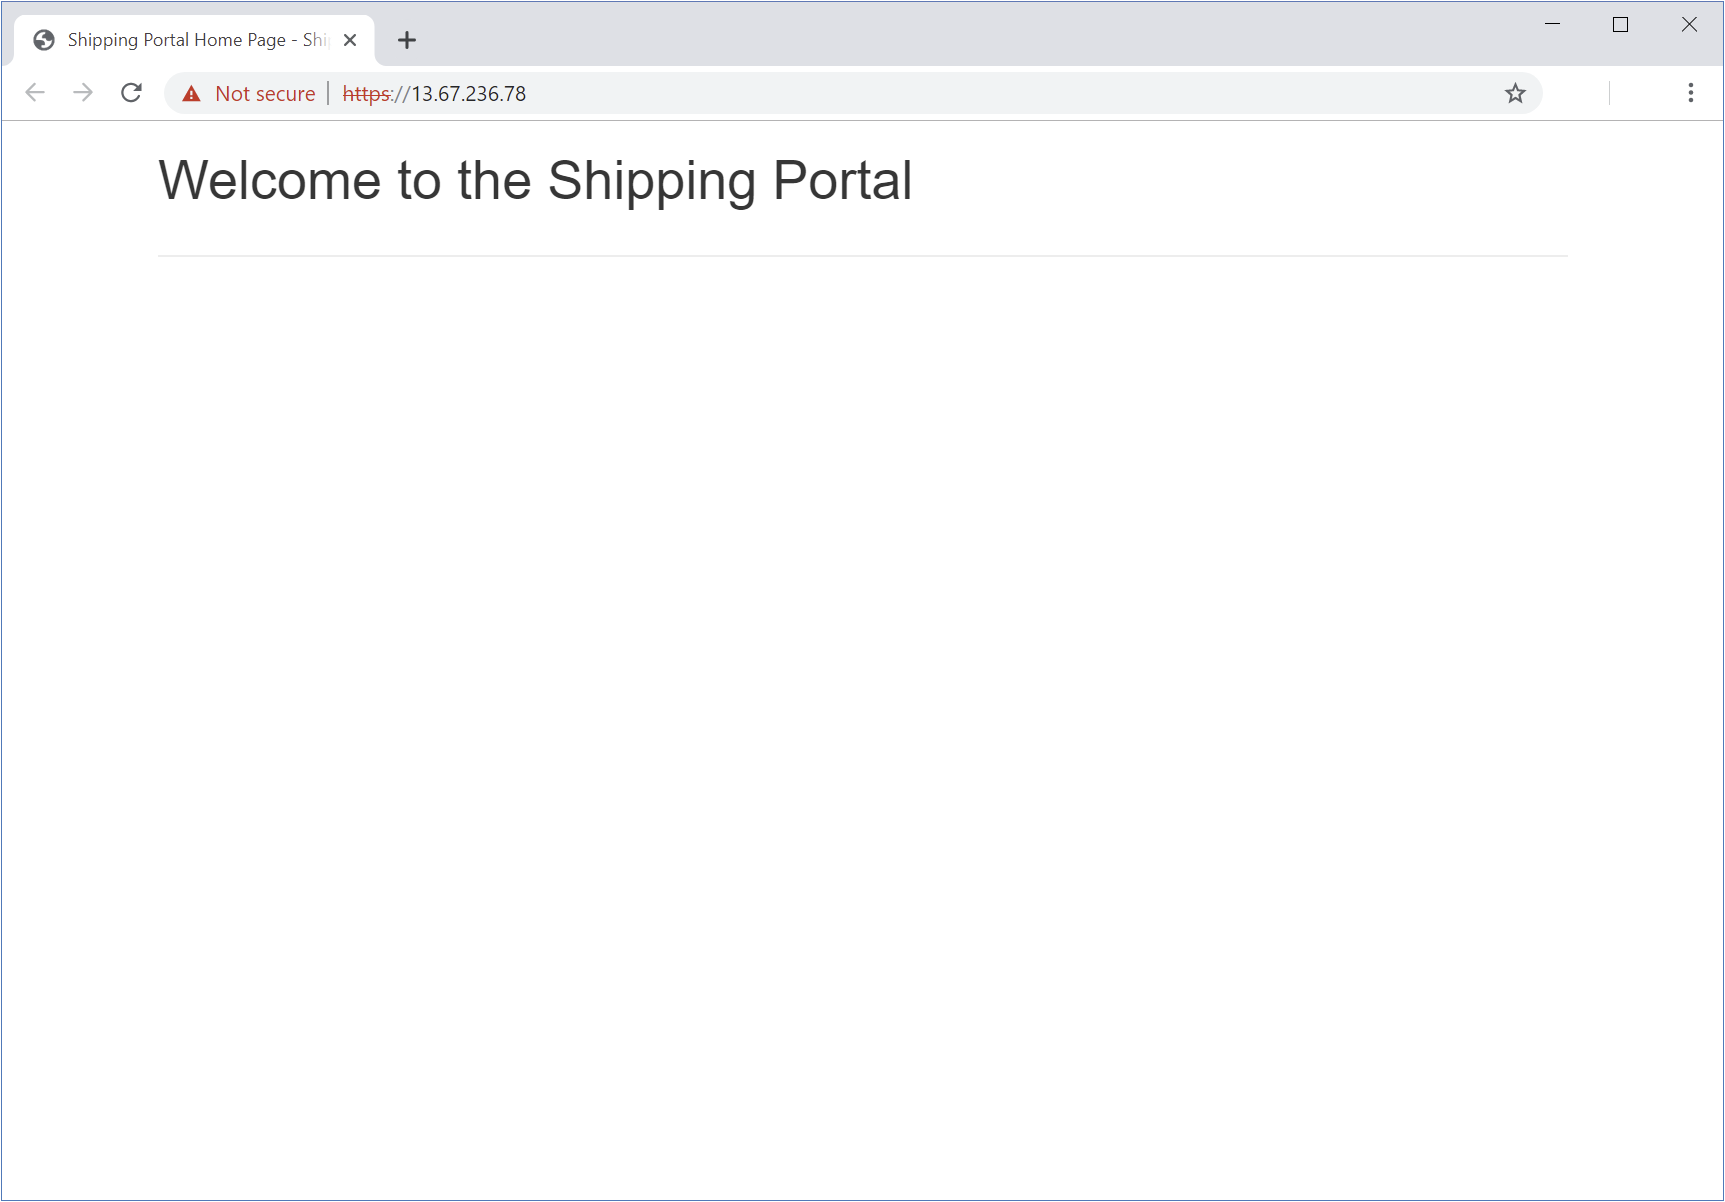 Screenshot of the shipping portal home page Microsoft Edge.